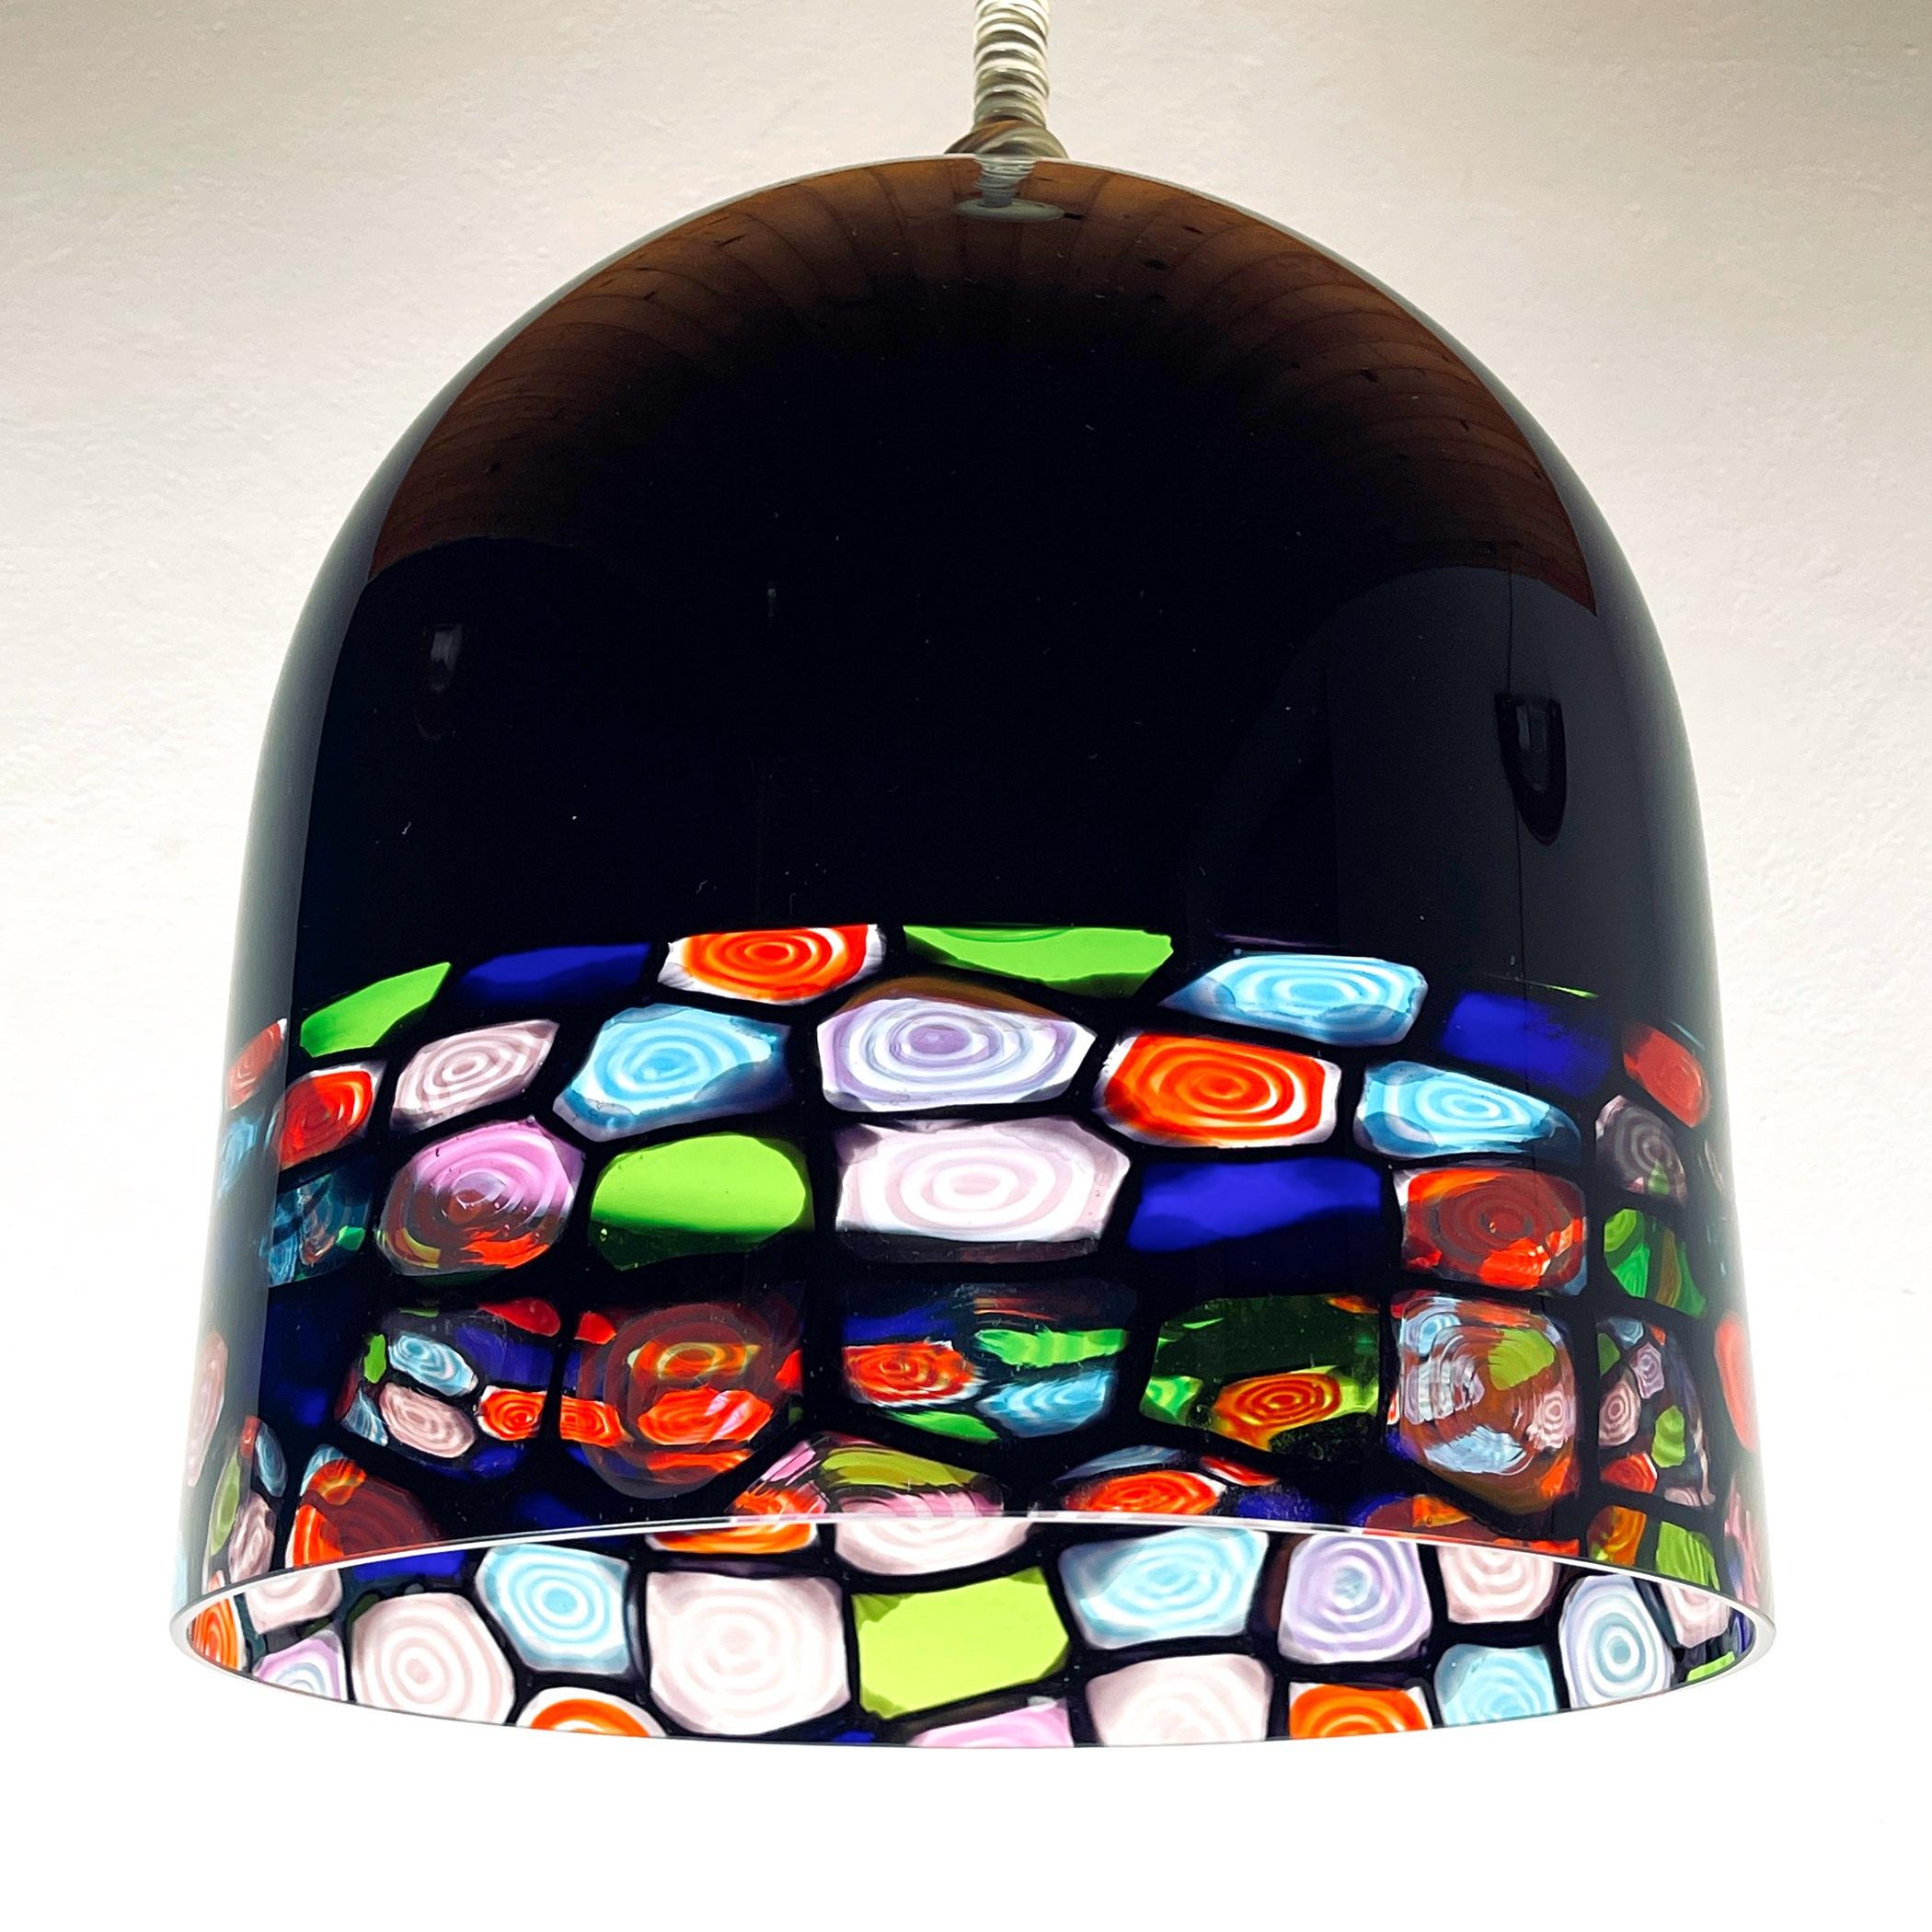 Original vintage murano pendant lamp Tinta by Renato Toso and Noti Massari. Hand blown glass with multicolor murrine. Original 